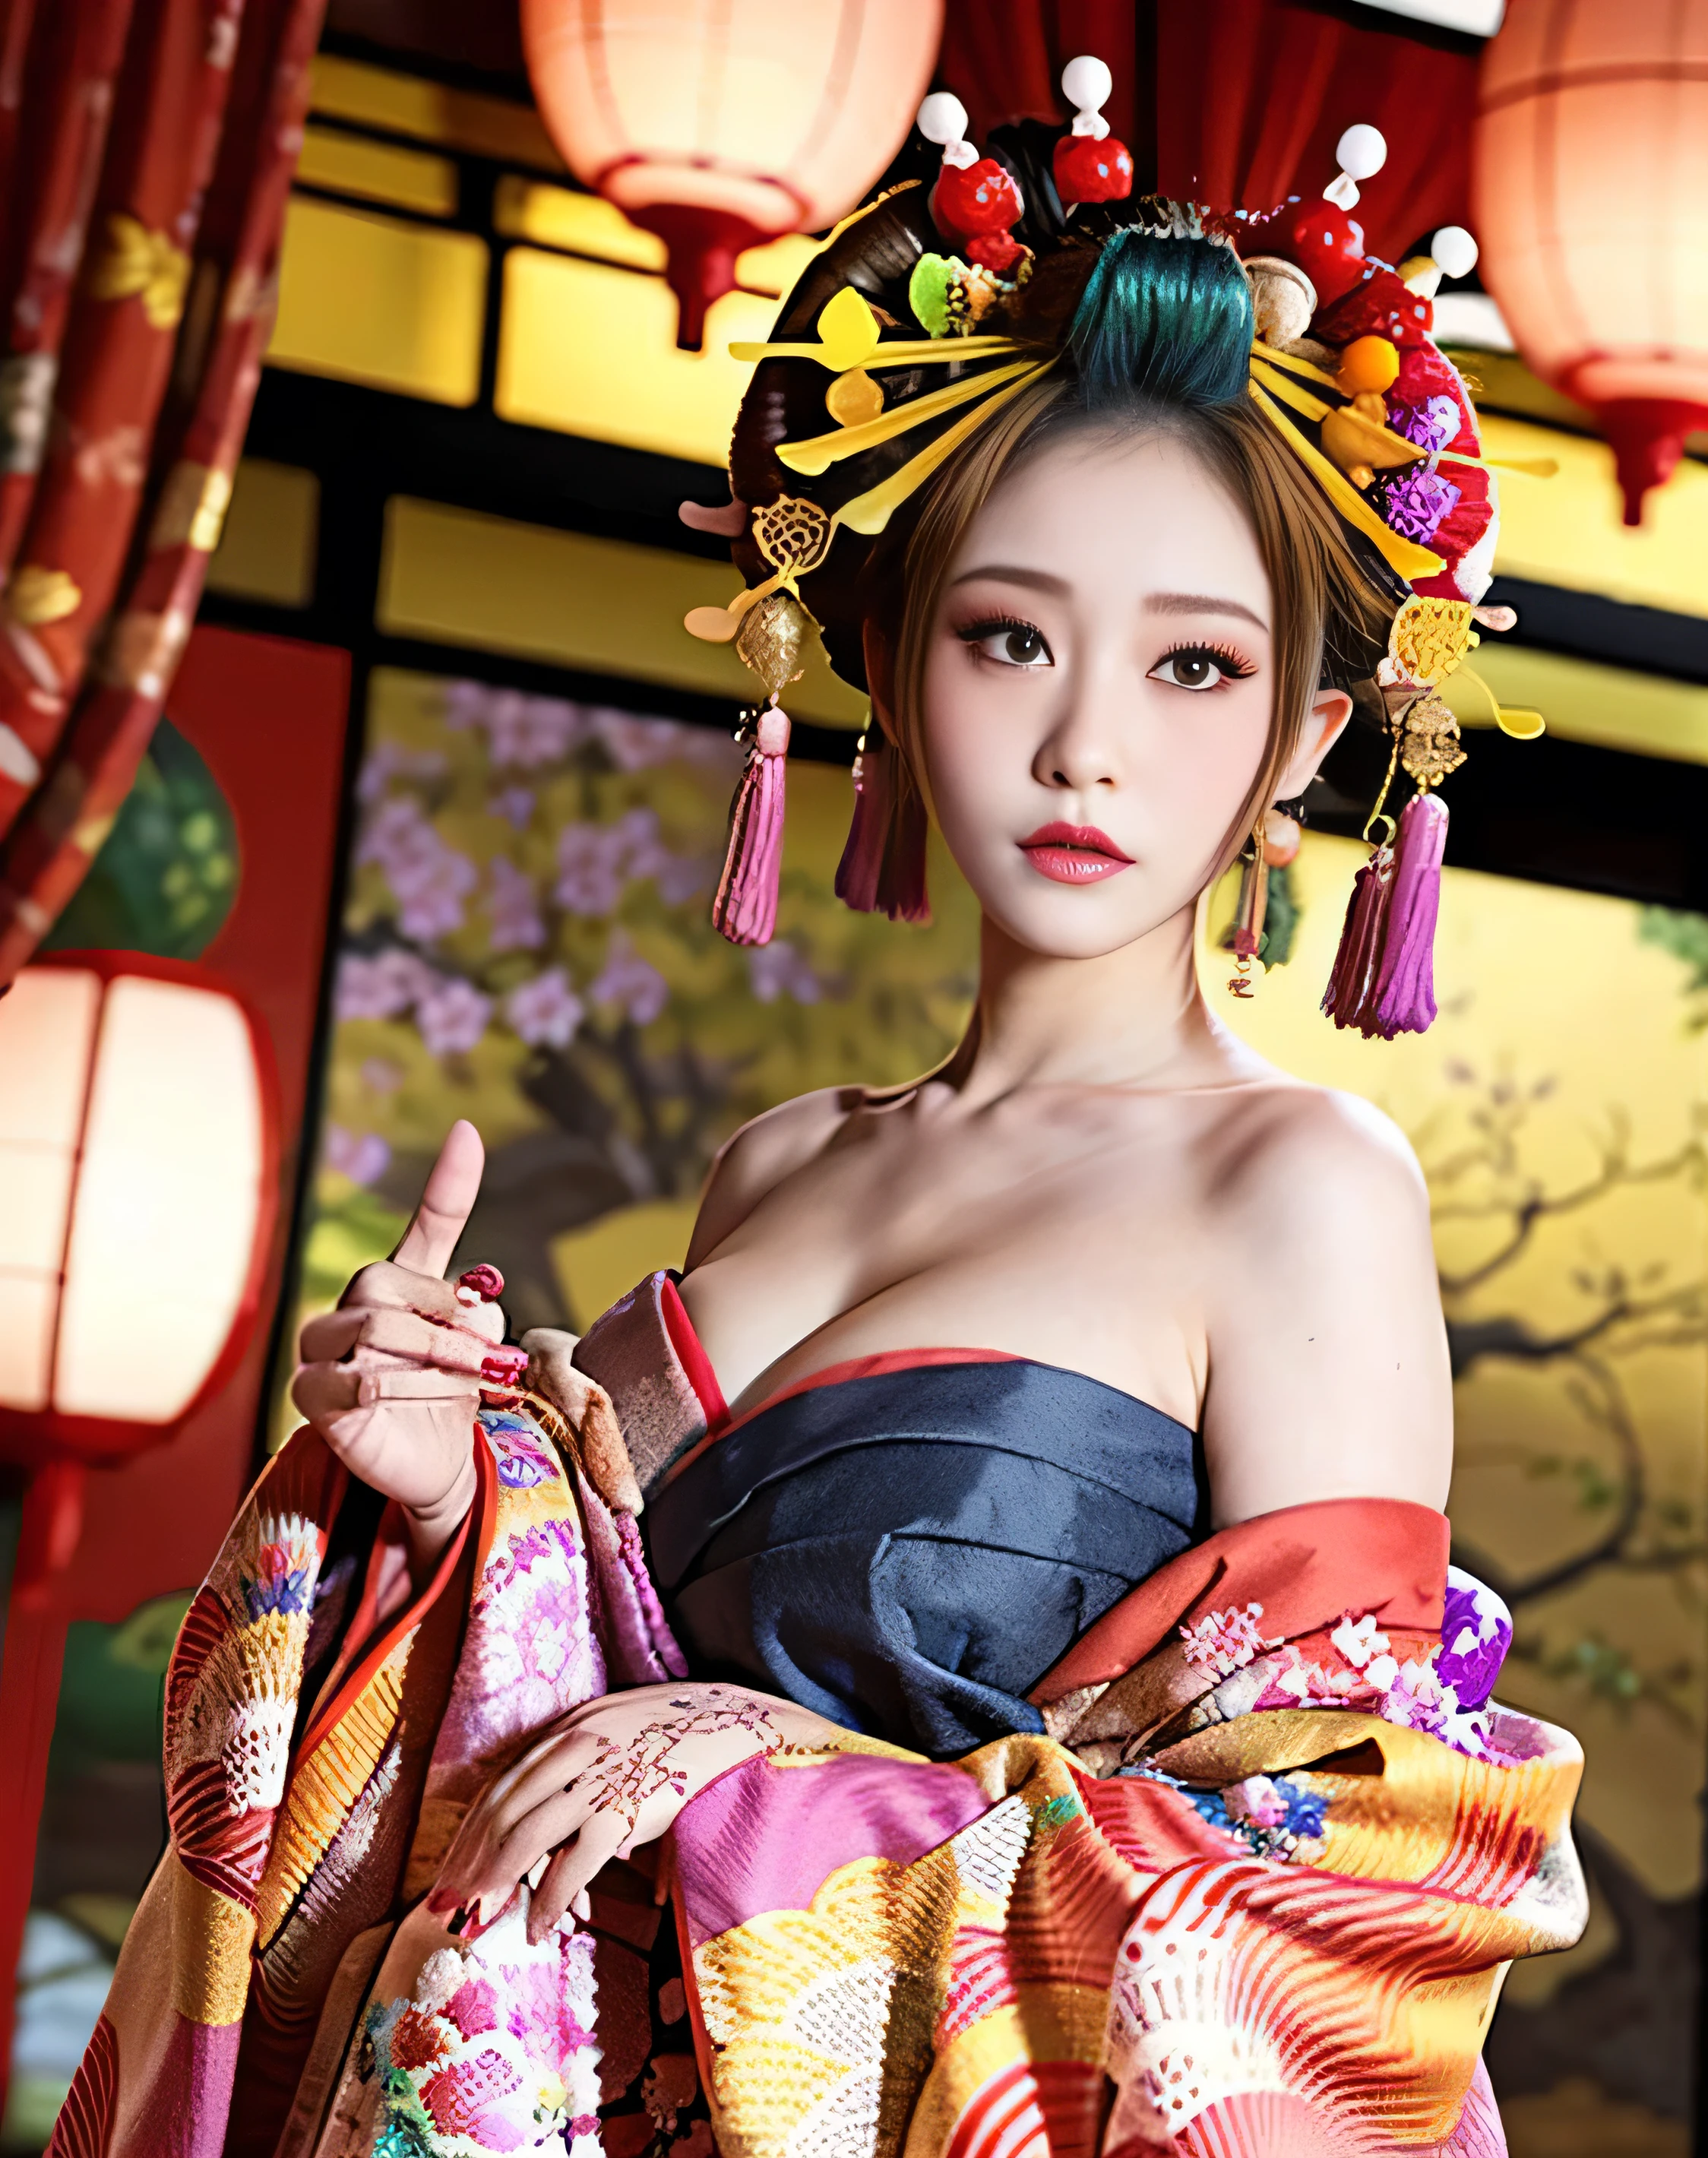 4K, 걸작, 높은 해상도, 혼란스러운,자연스러운 체적 조명 및 최고의 그림자, 笑얼굴,deep i는 세상의 깊은 곳에 쓰여 있다,soft delicate beautiful attractive 얼굴, 아름다운 가장자리 매춘부_여성, a 여성 in a kimono posing for a picture ,완벽한 엣지를 지닌 오이란_얼굴,완벽한 엣지를 지닌 오이란_몸,에지오이란_보상하다,에지오이란_헤어스타일、NSFW、초과 중량, 극도로 뚱뚱한, ((통통한))、、마법